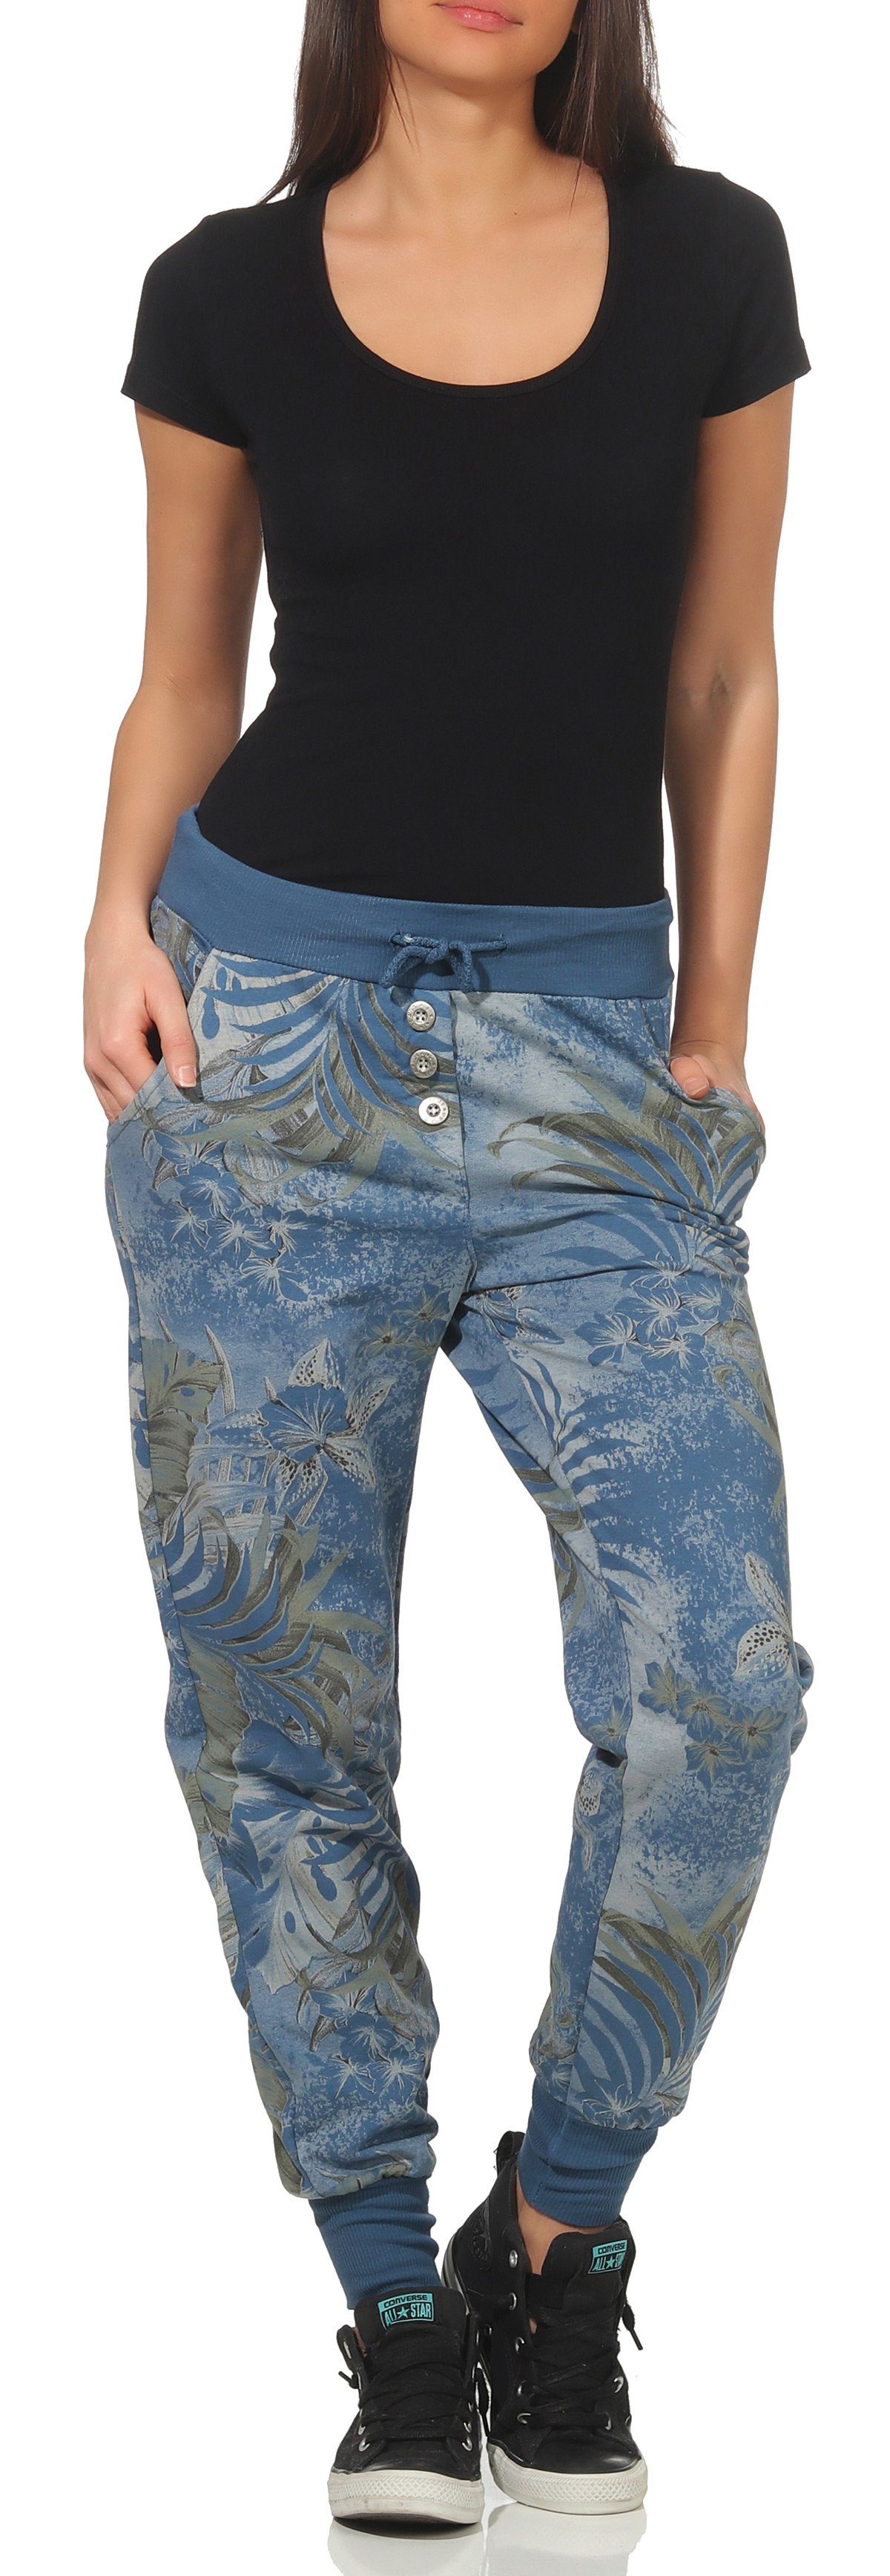 more malito fashion Jogginghose Jungelprint mit 83728 Sweatpants than jeansblau